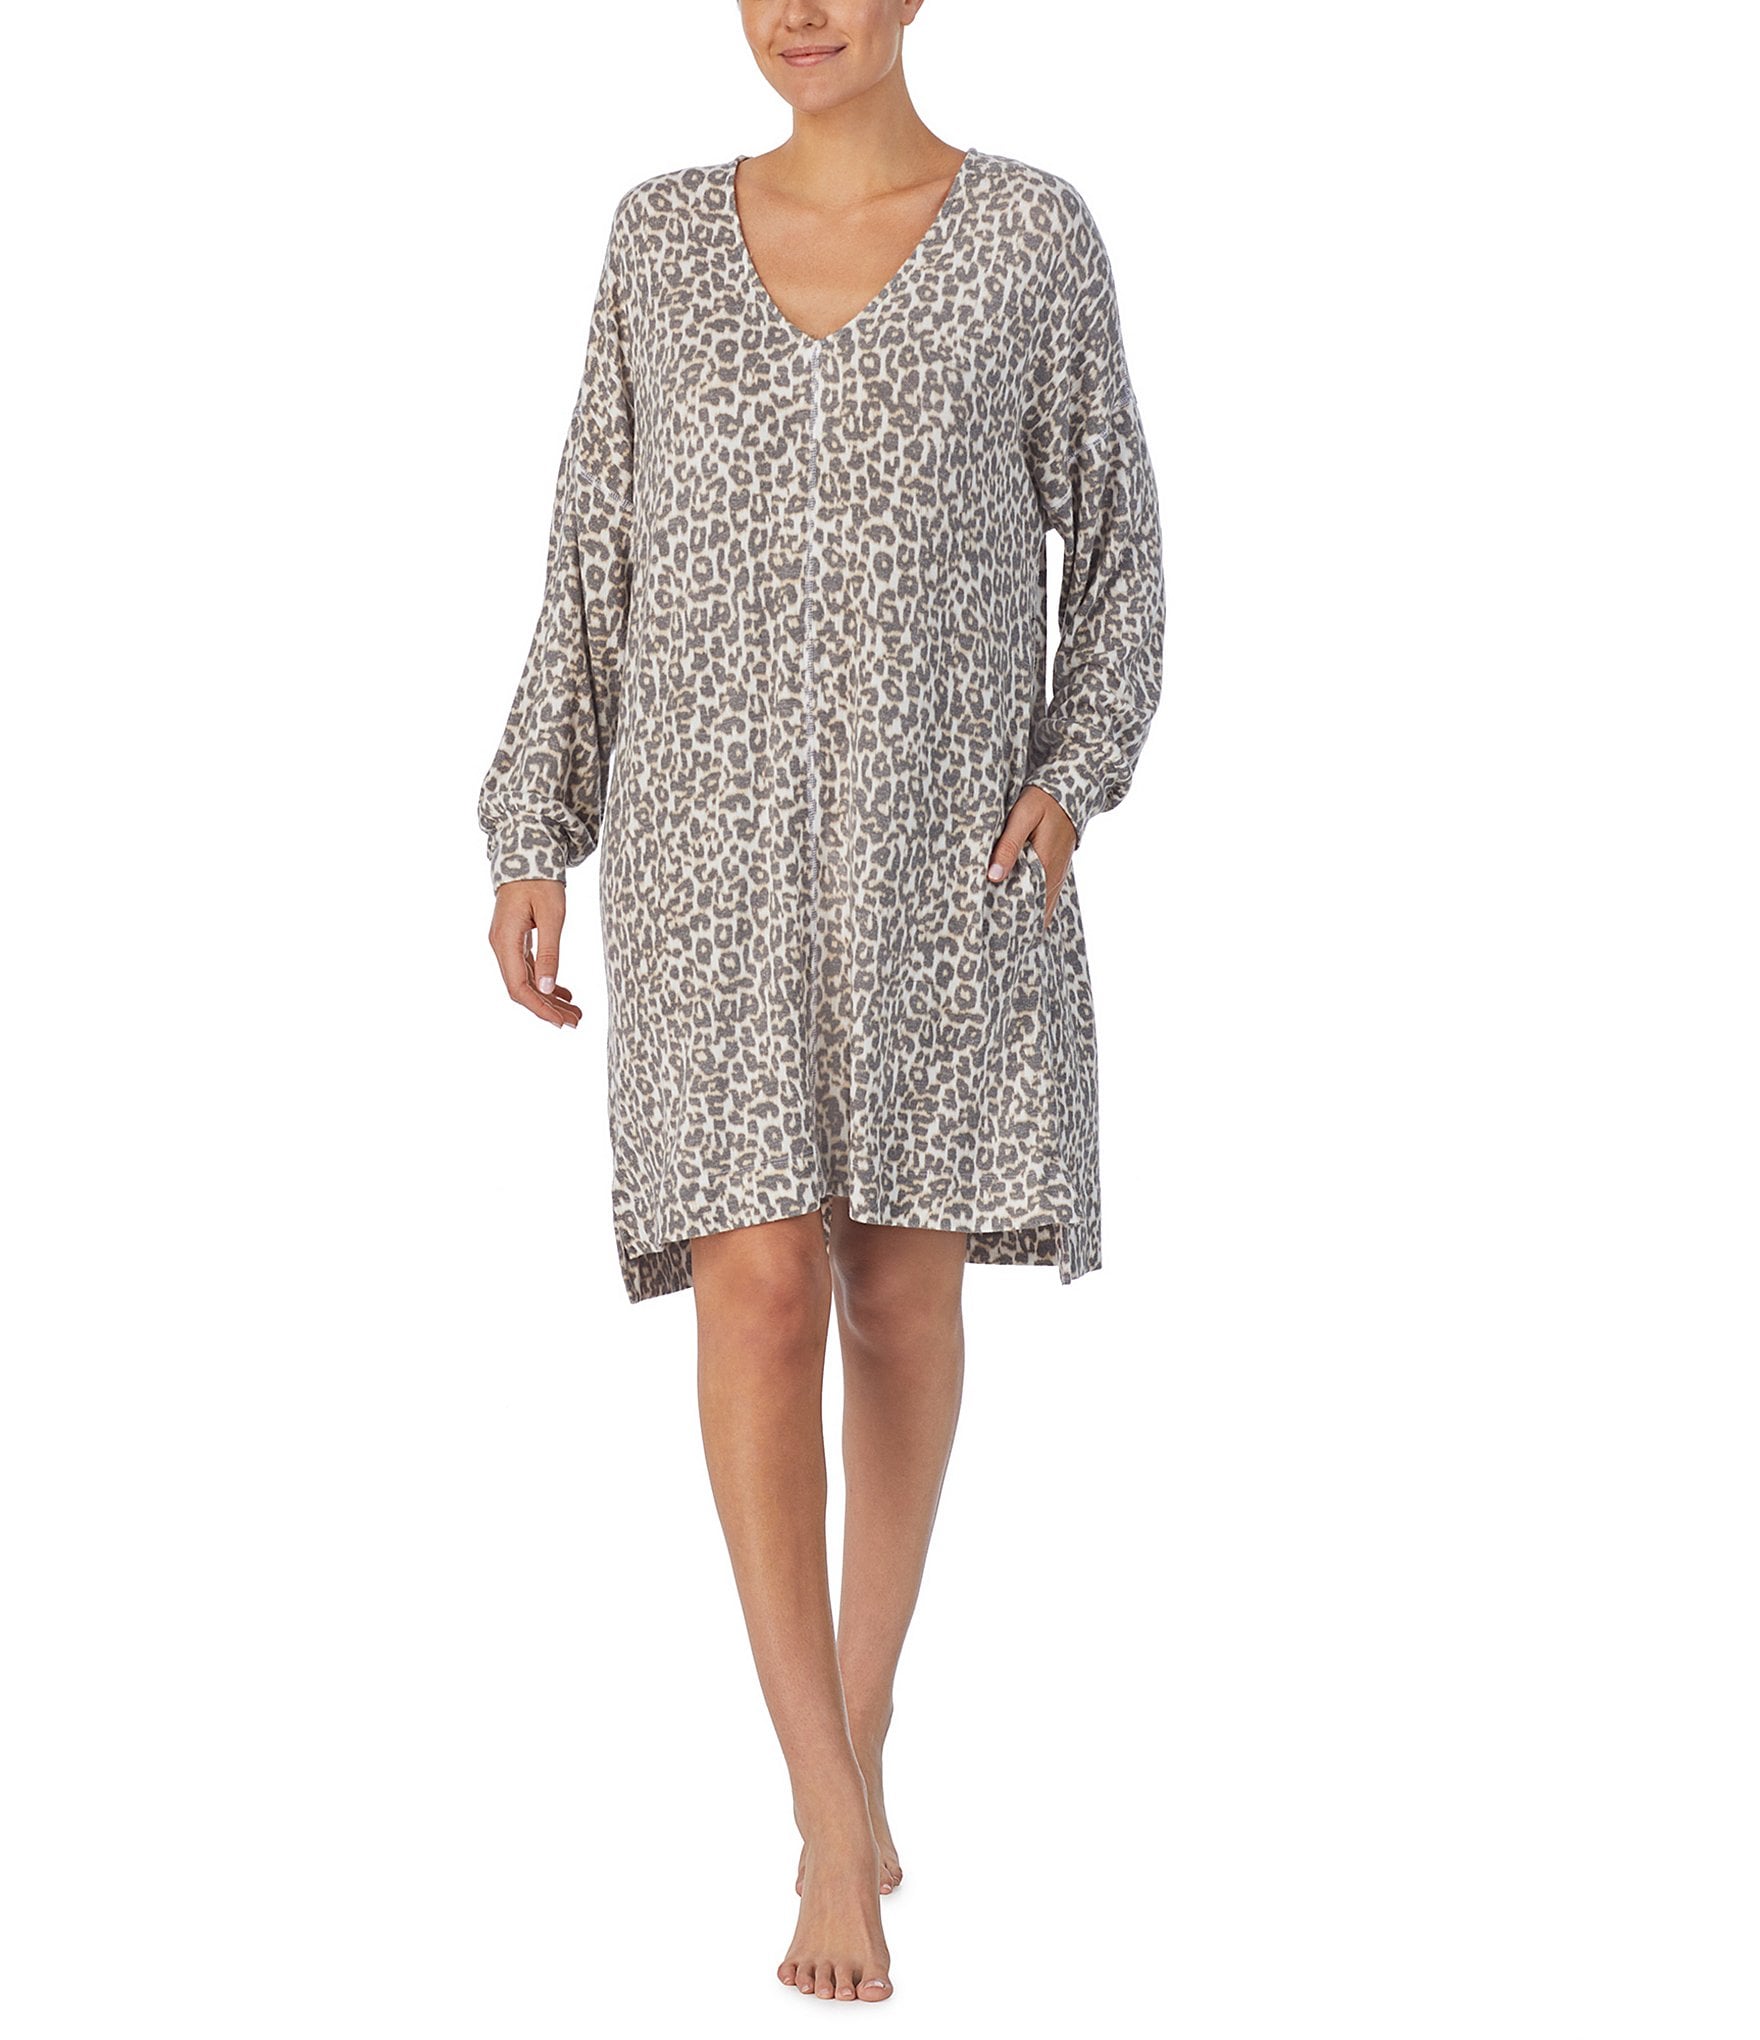 DKNY Donna Karan Sleepwear Gathered Matte Satin Nightgown